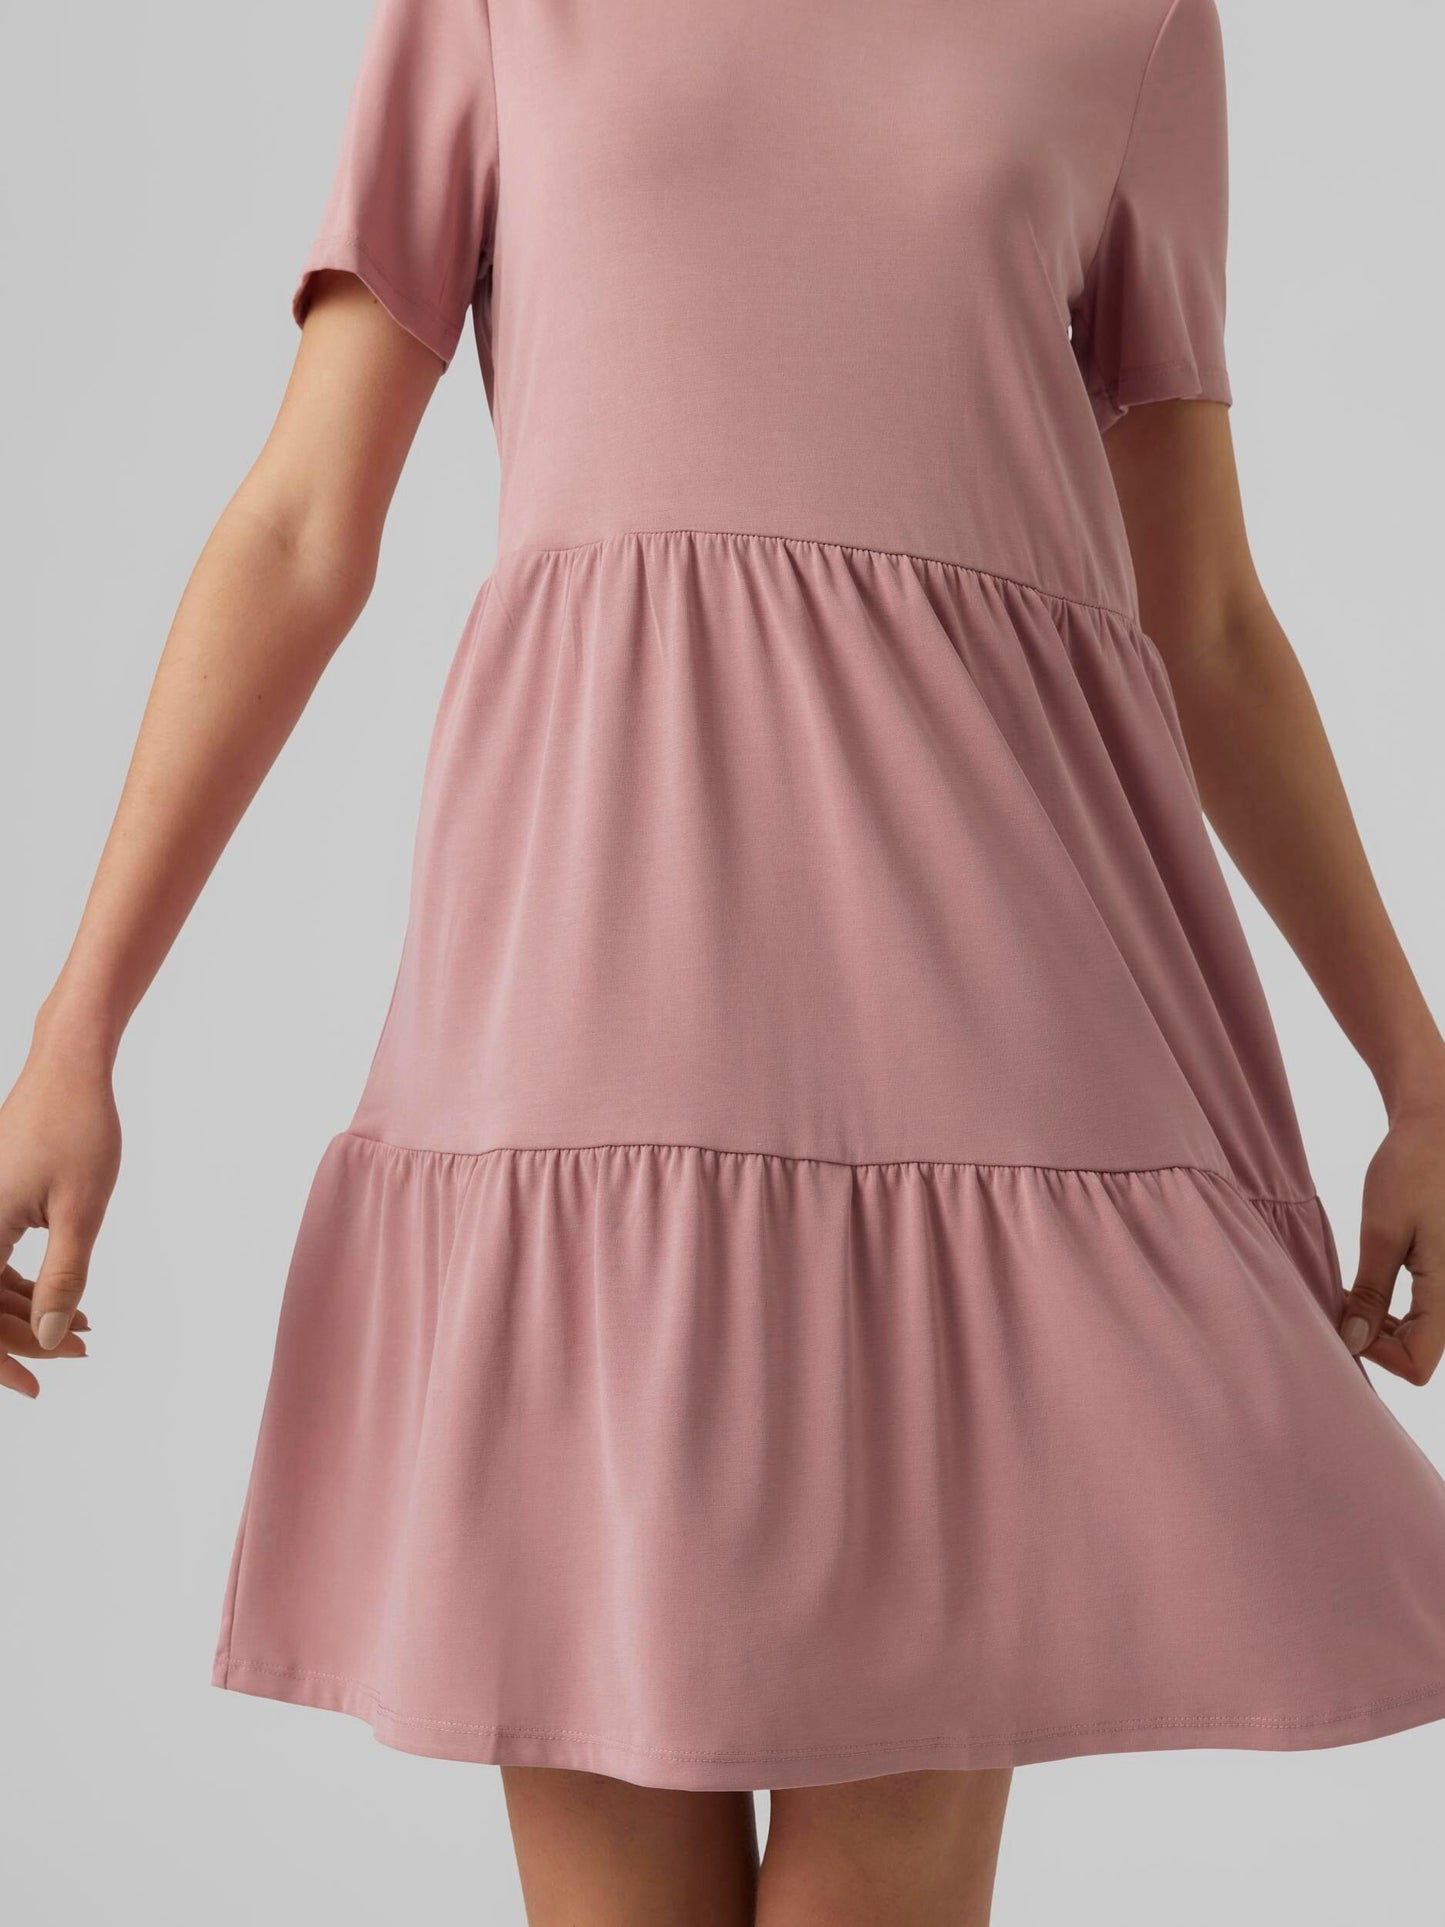 Filli Dress | Nostalgia Rose Dresses Vero Moda 